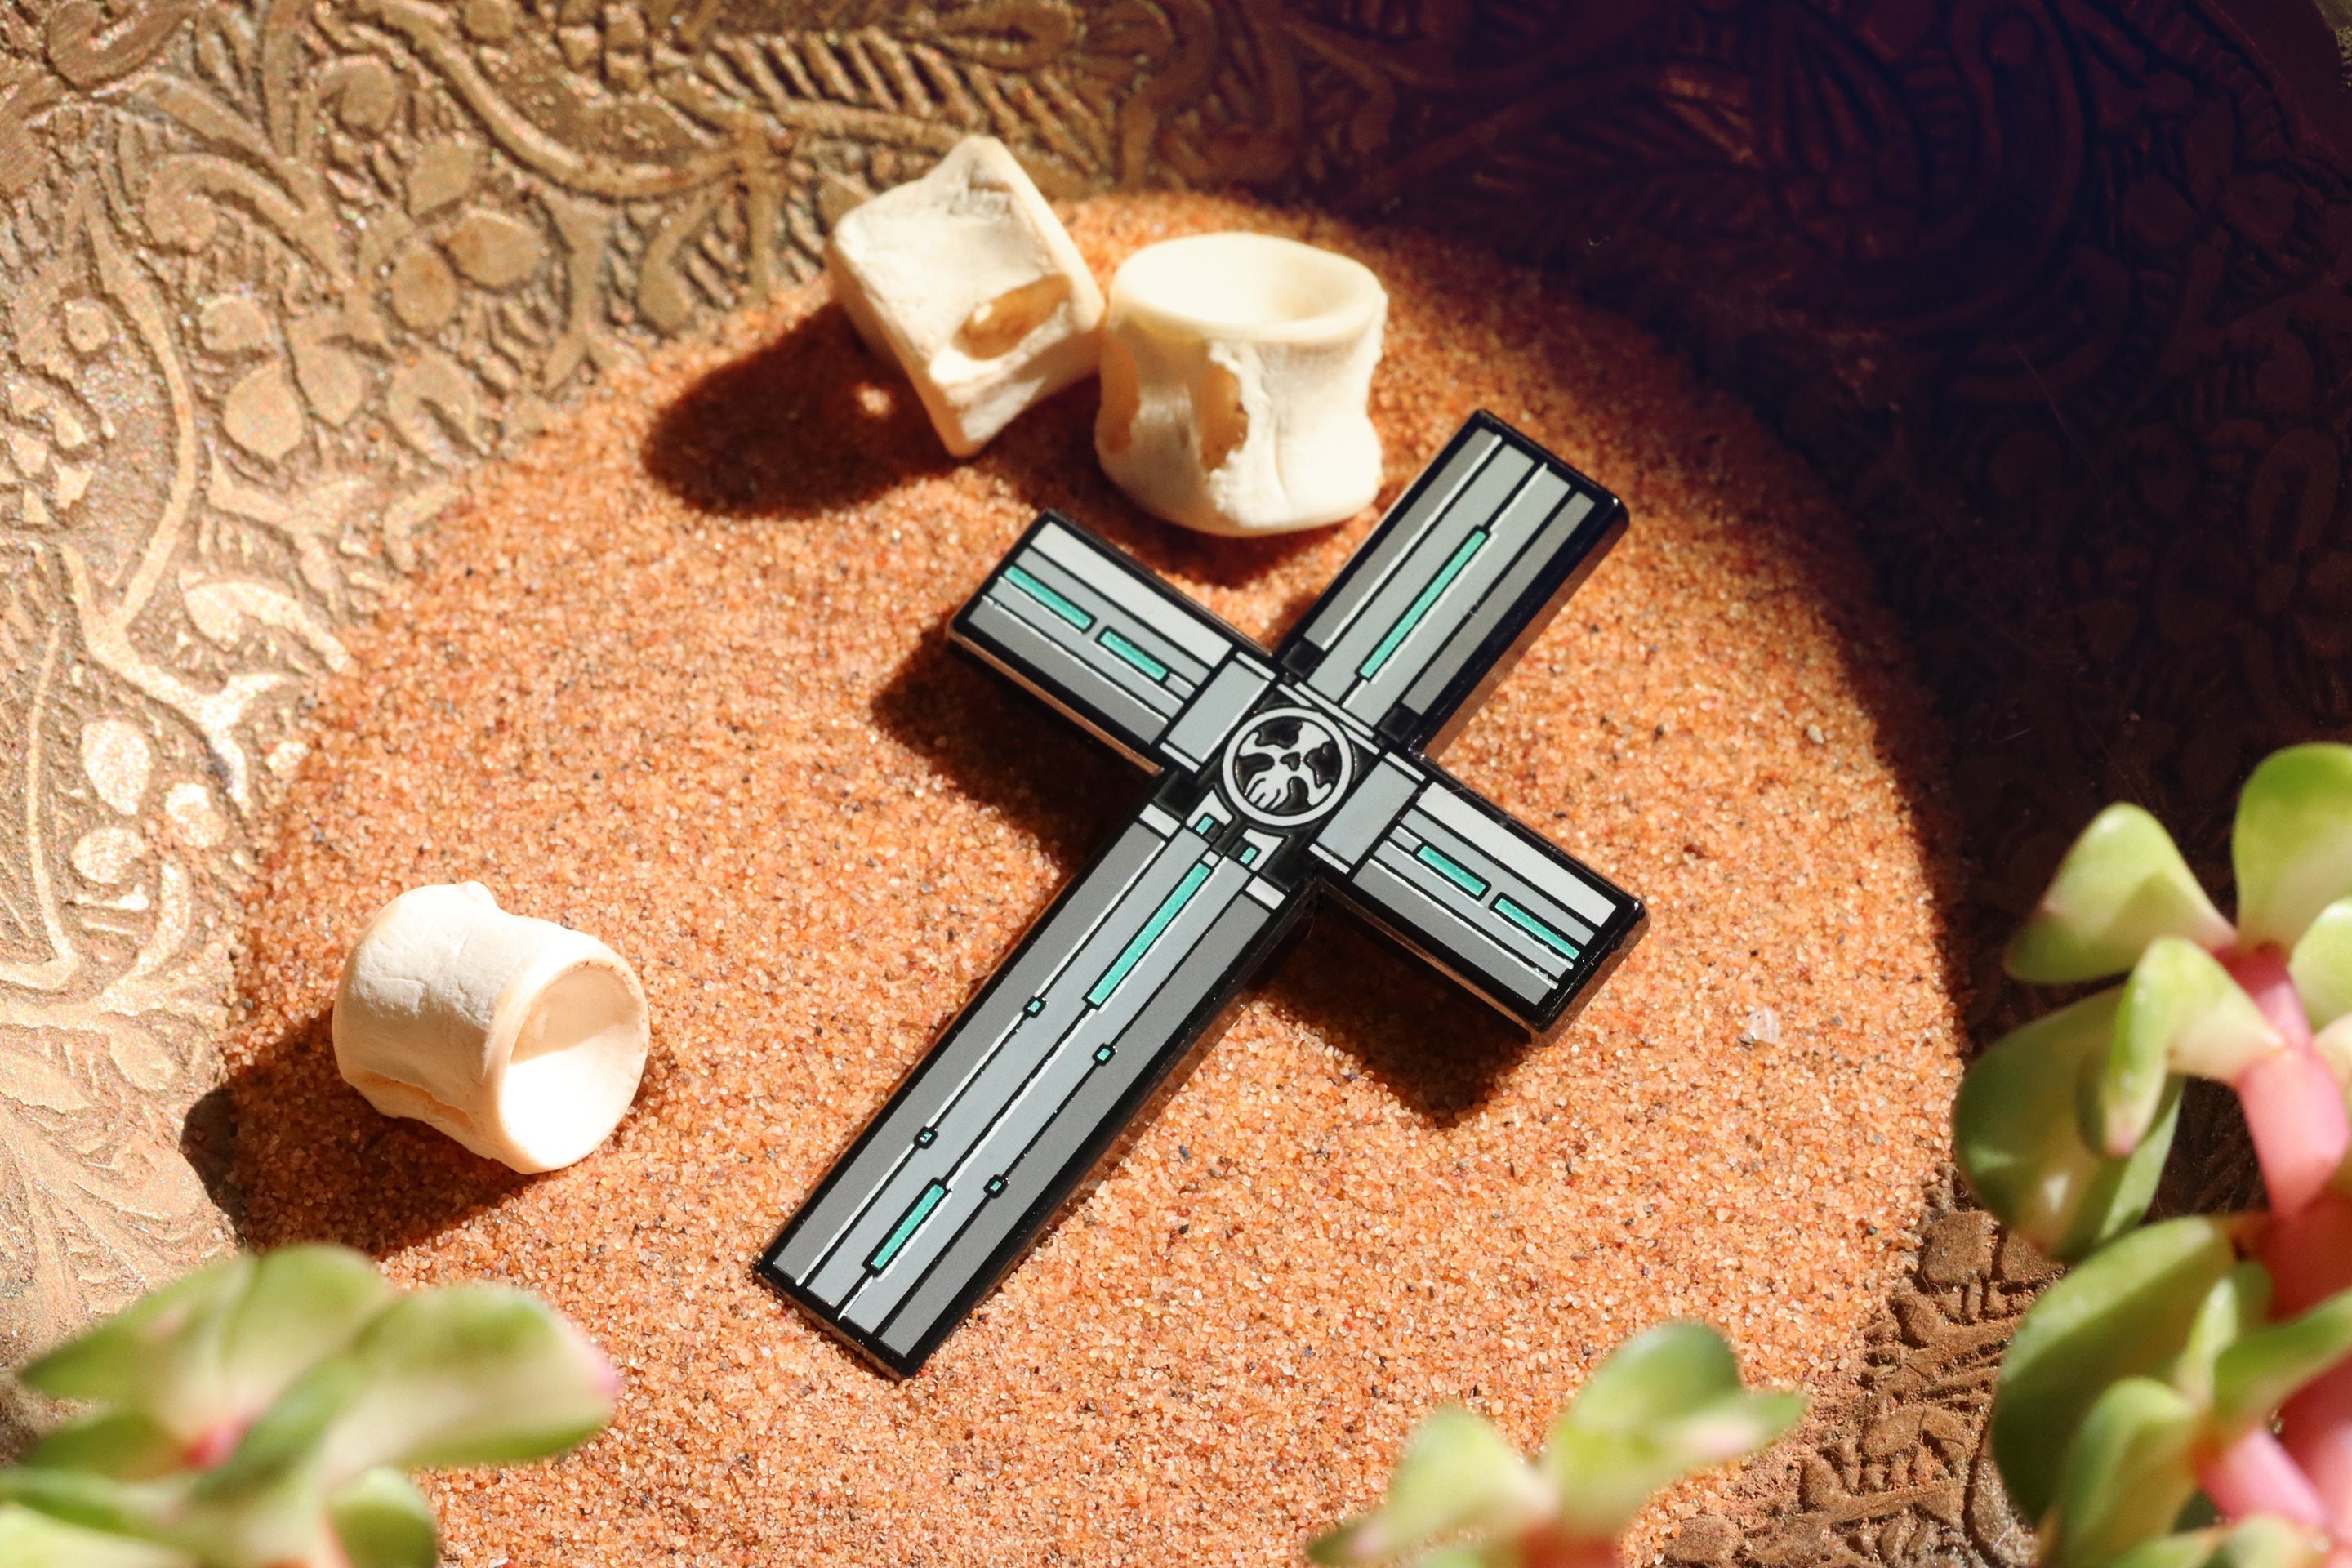 White Rhinestone Rosary Crucifix / Large BLUE Crucifix Pendant / 2 GREEN  Crucifix Cross / Silver Rosary Parts DIY Rosary Making Supplies 